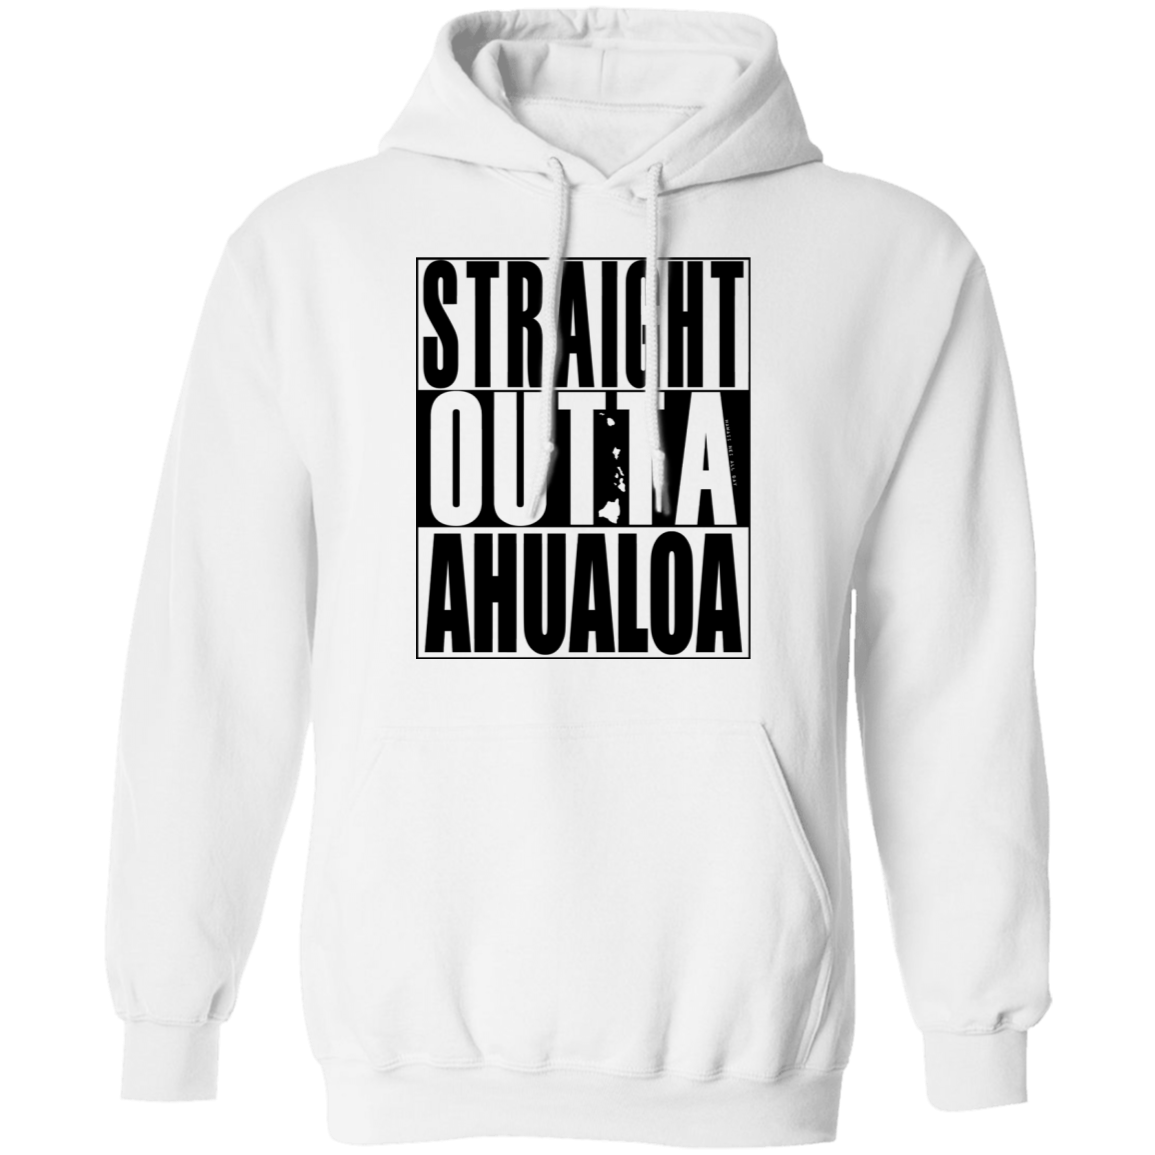 Straight Outta Ahualoa(black ink) Pullover Hoodie